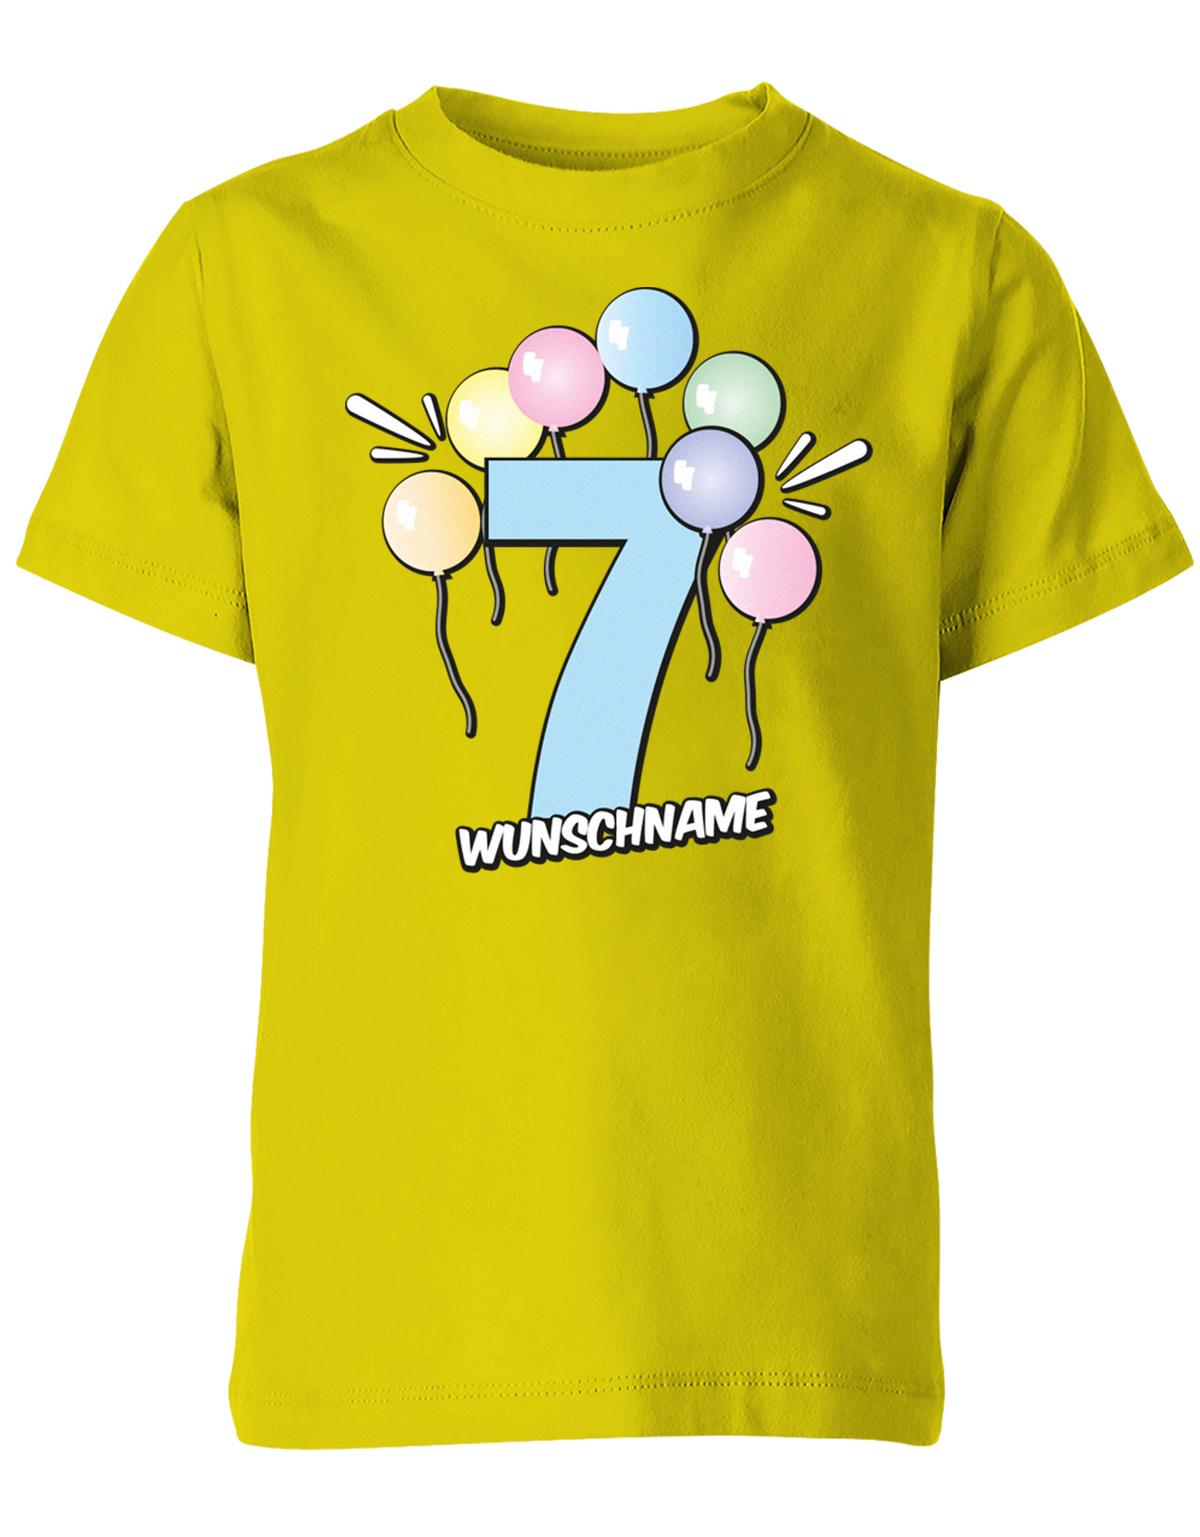 Luftballons-pastell-7-geburtstag-wunschname-kinder-shirt-gelb